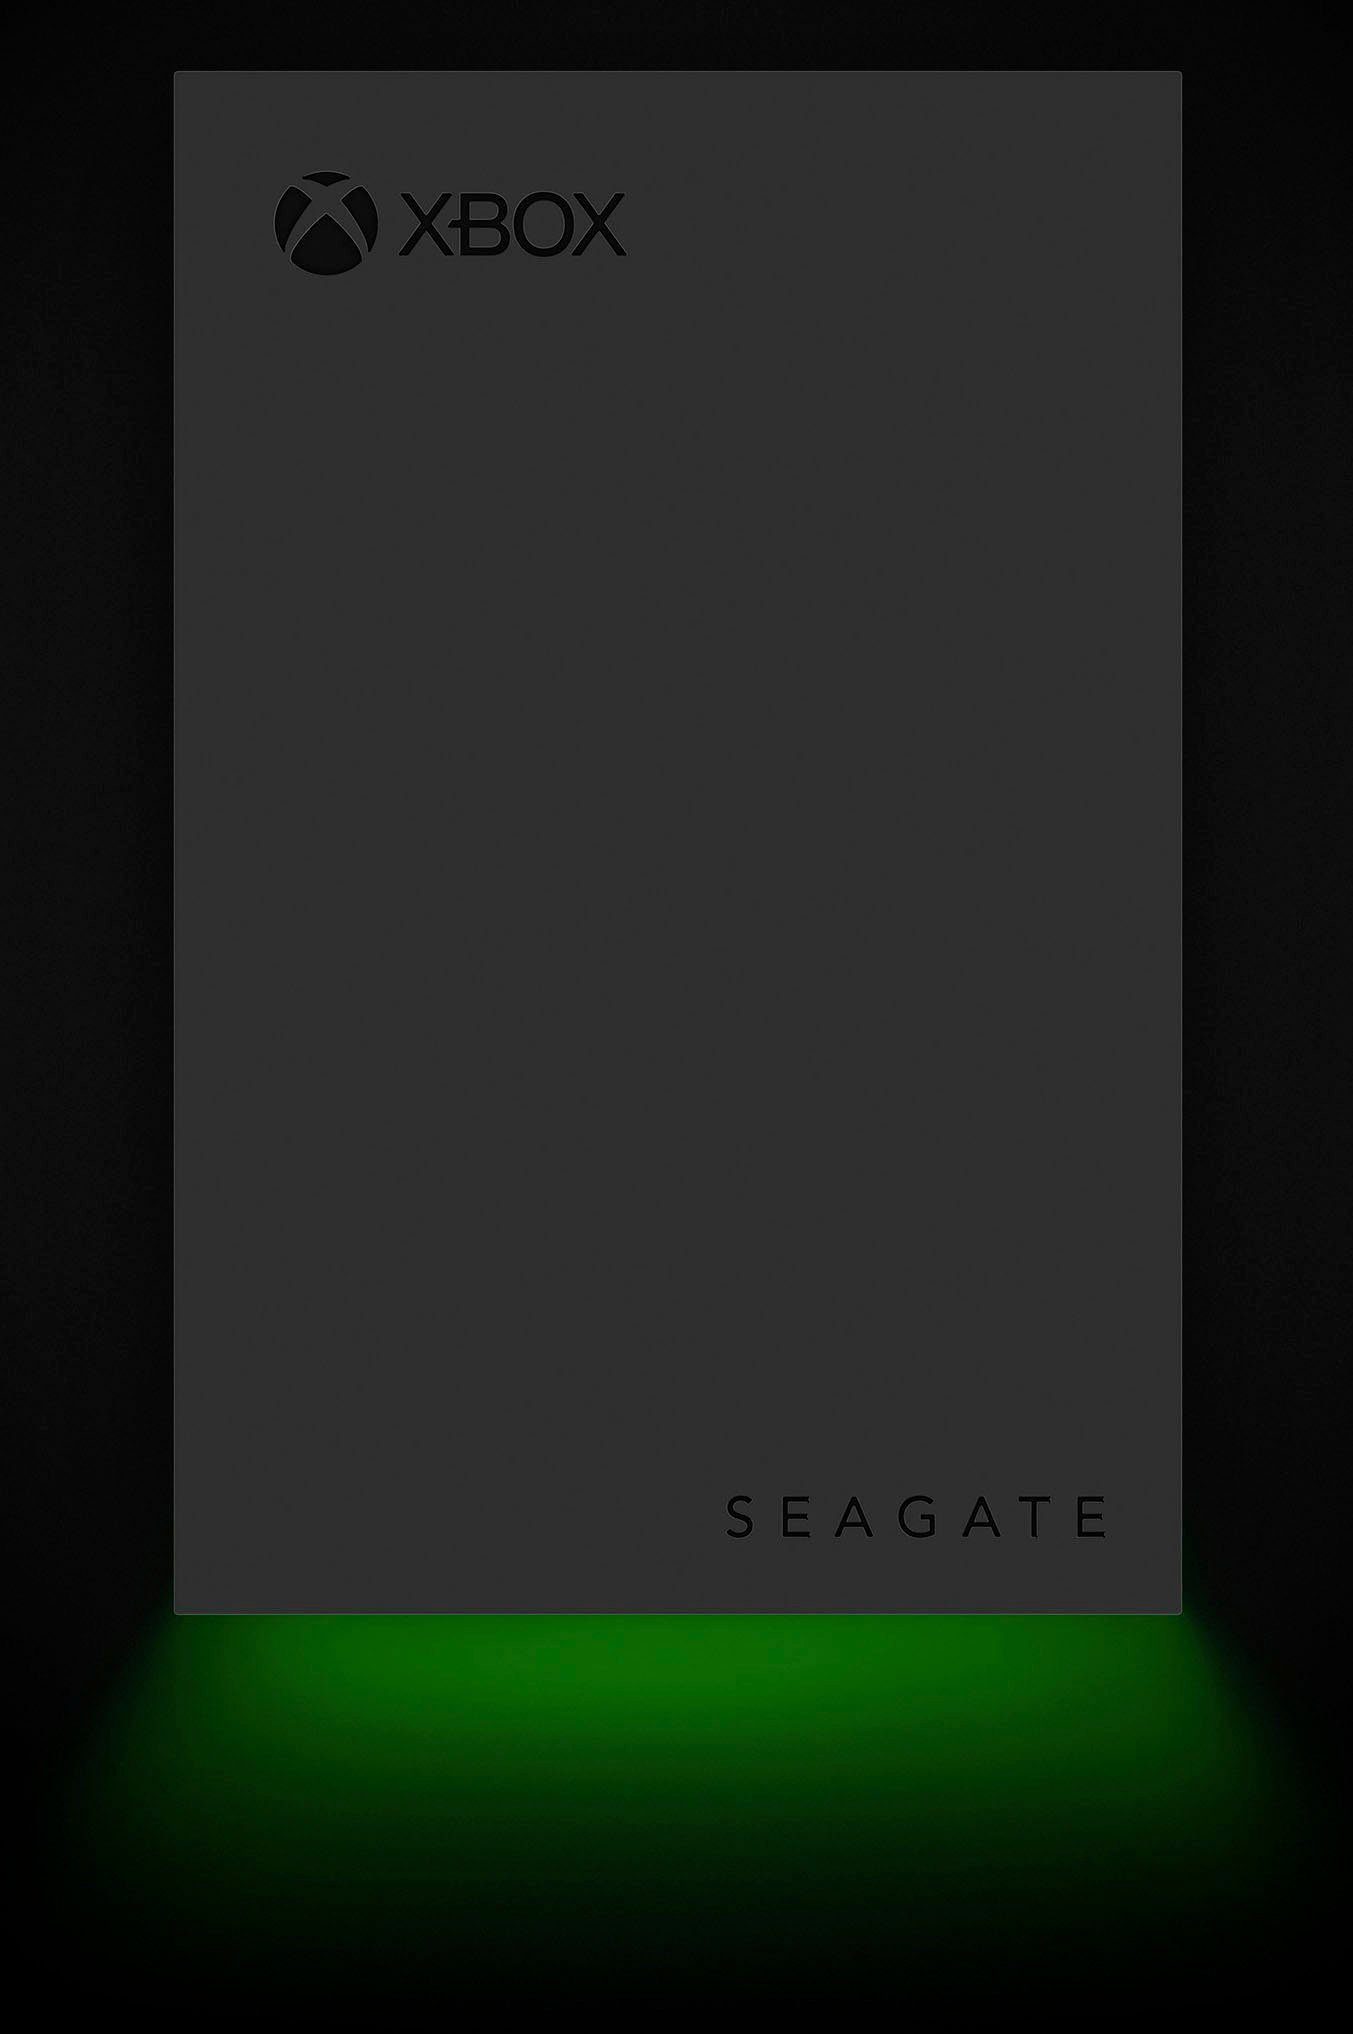 externe Game 4TB Seagate Xbox (4 Drive TB) Gaming-Festplatte